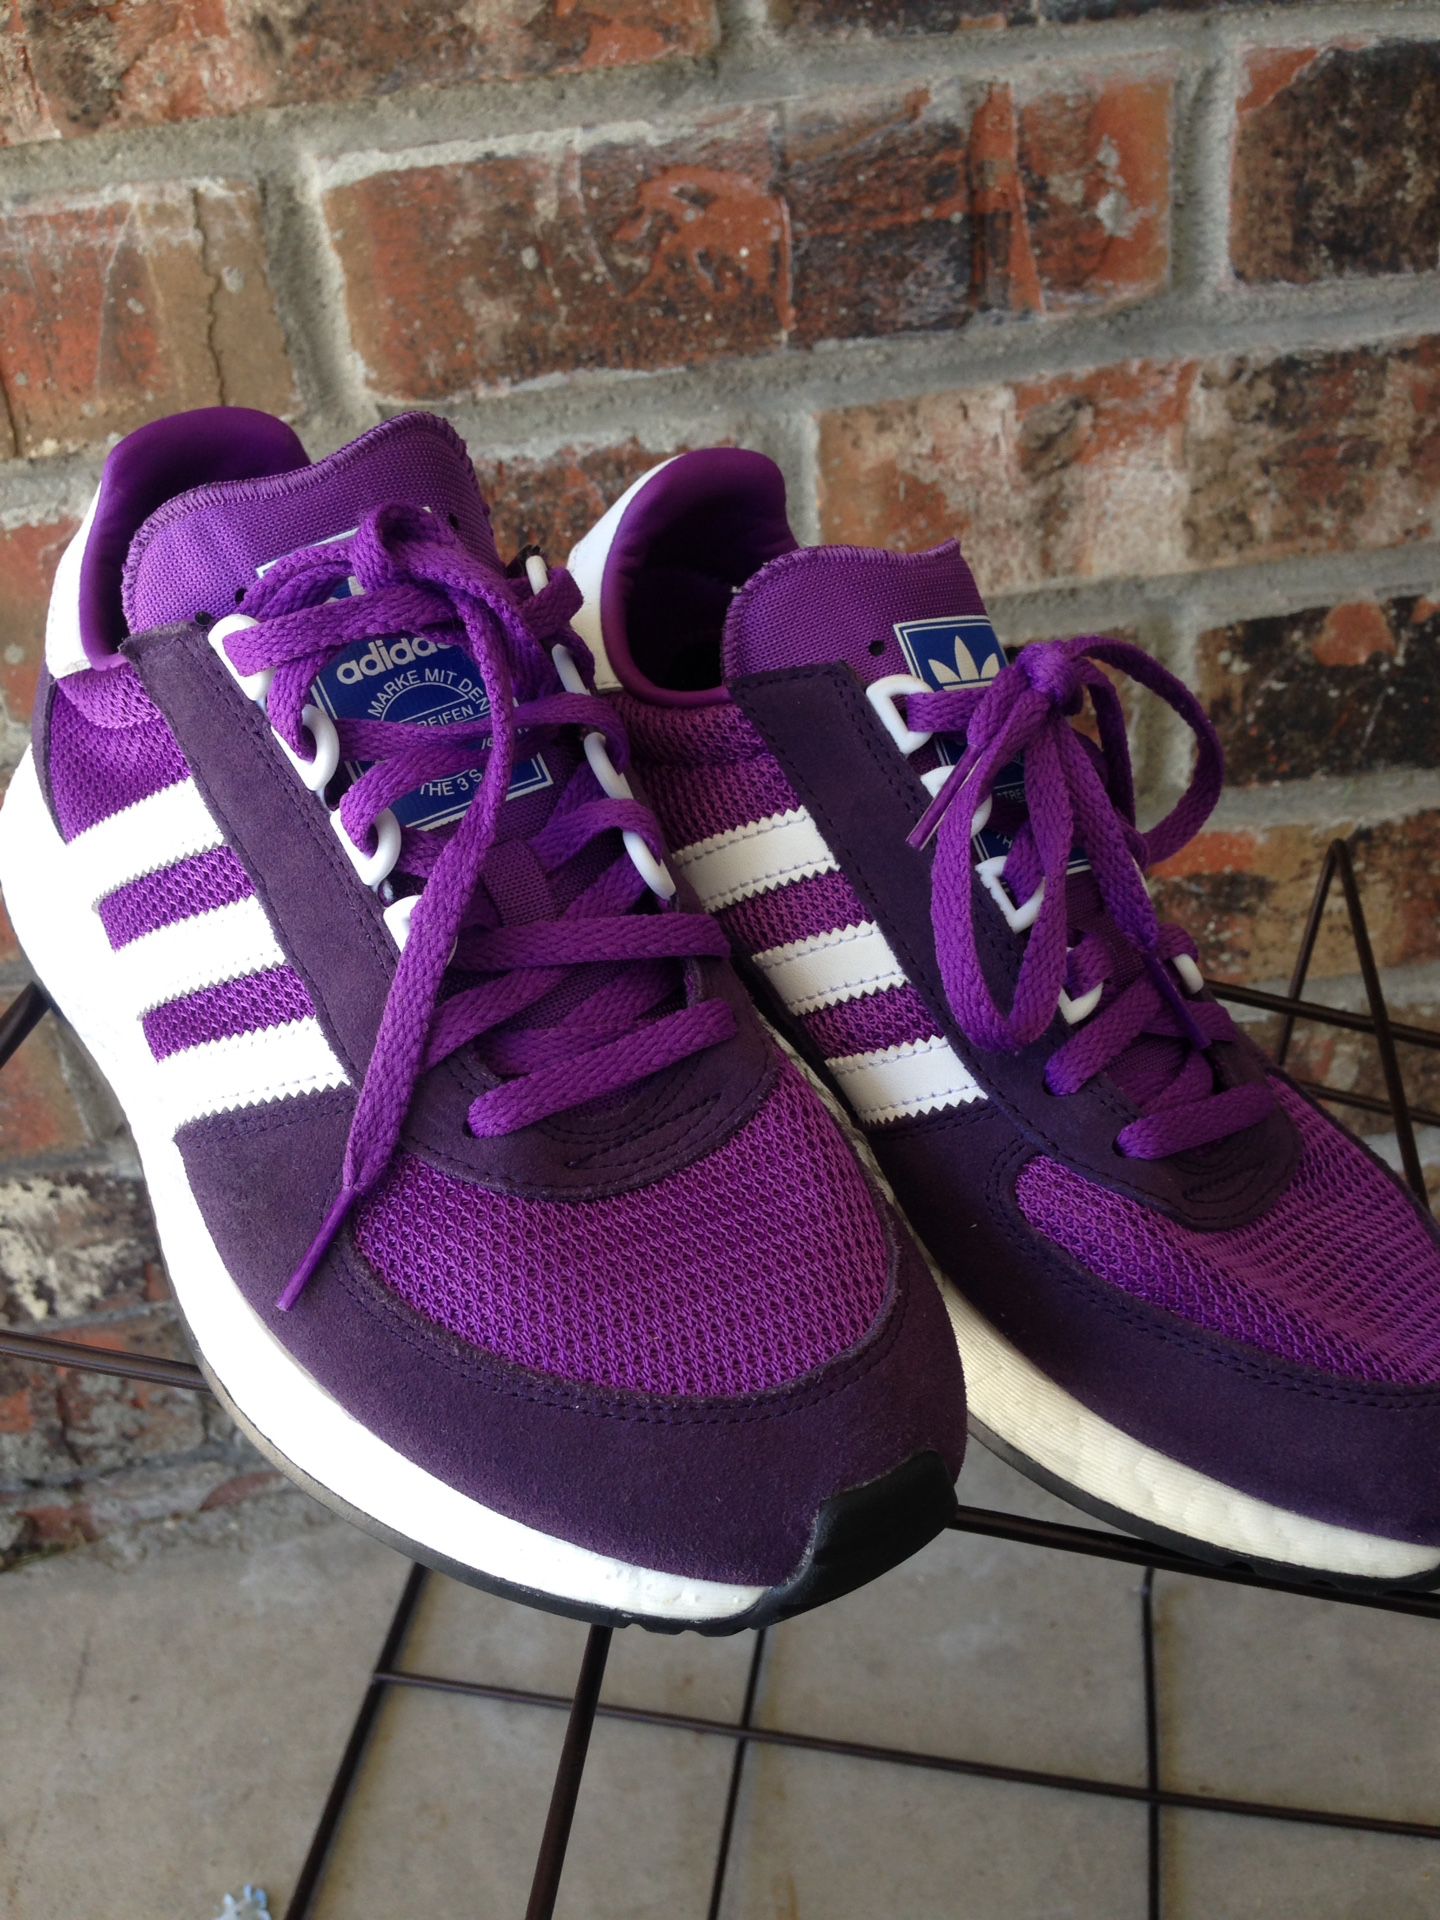 Adidas Originals Women's Marathon X 5923 Shoes